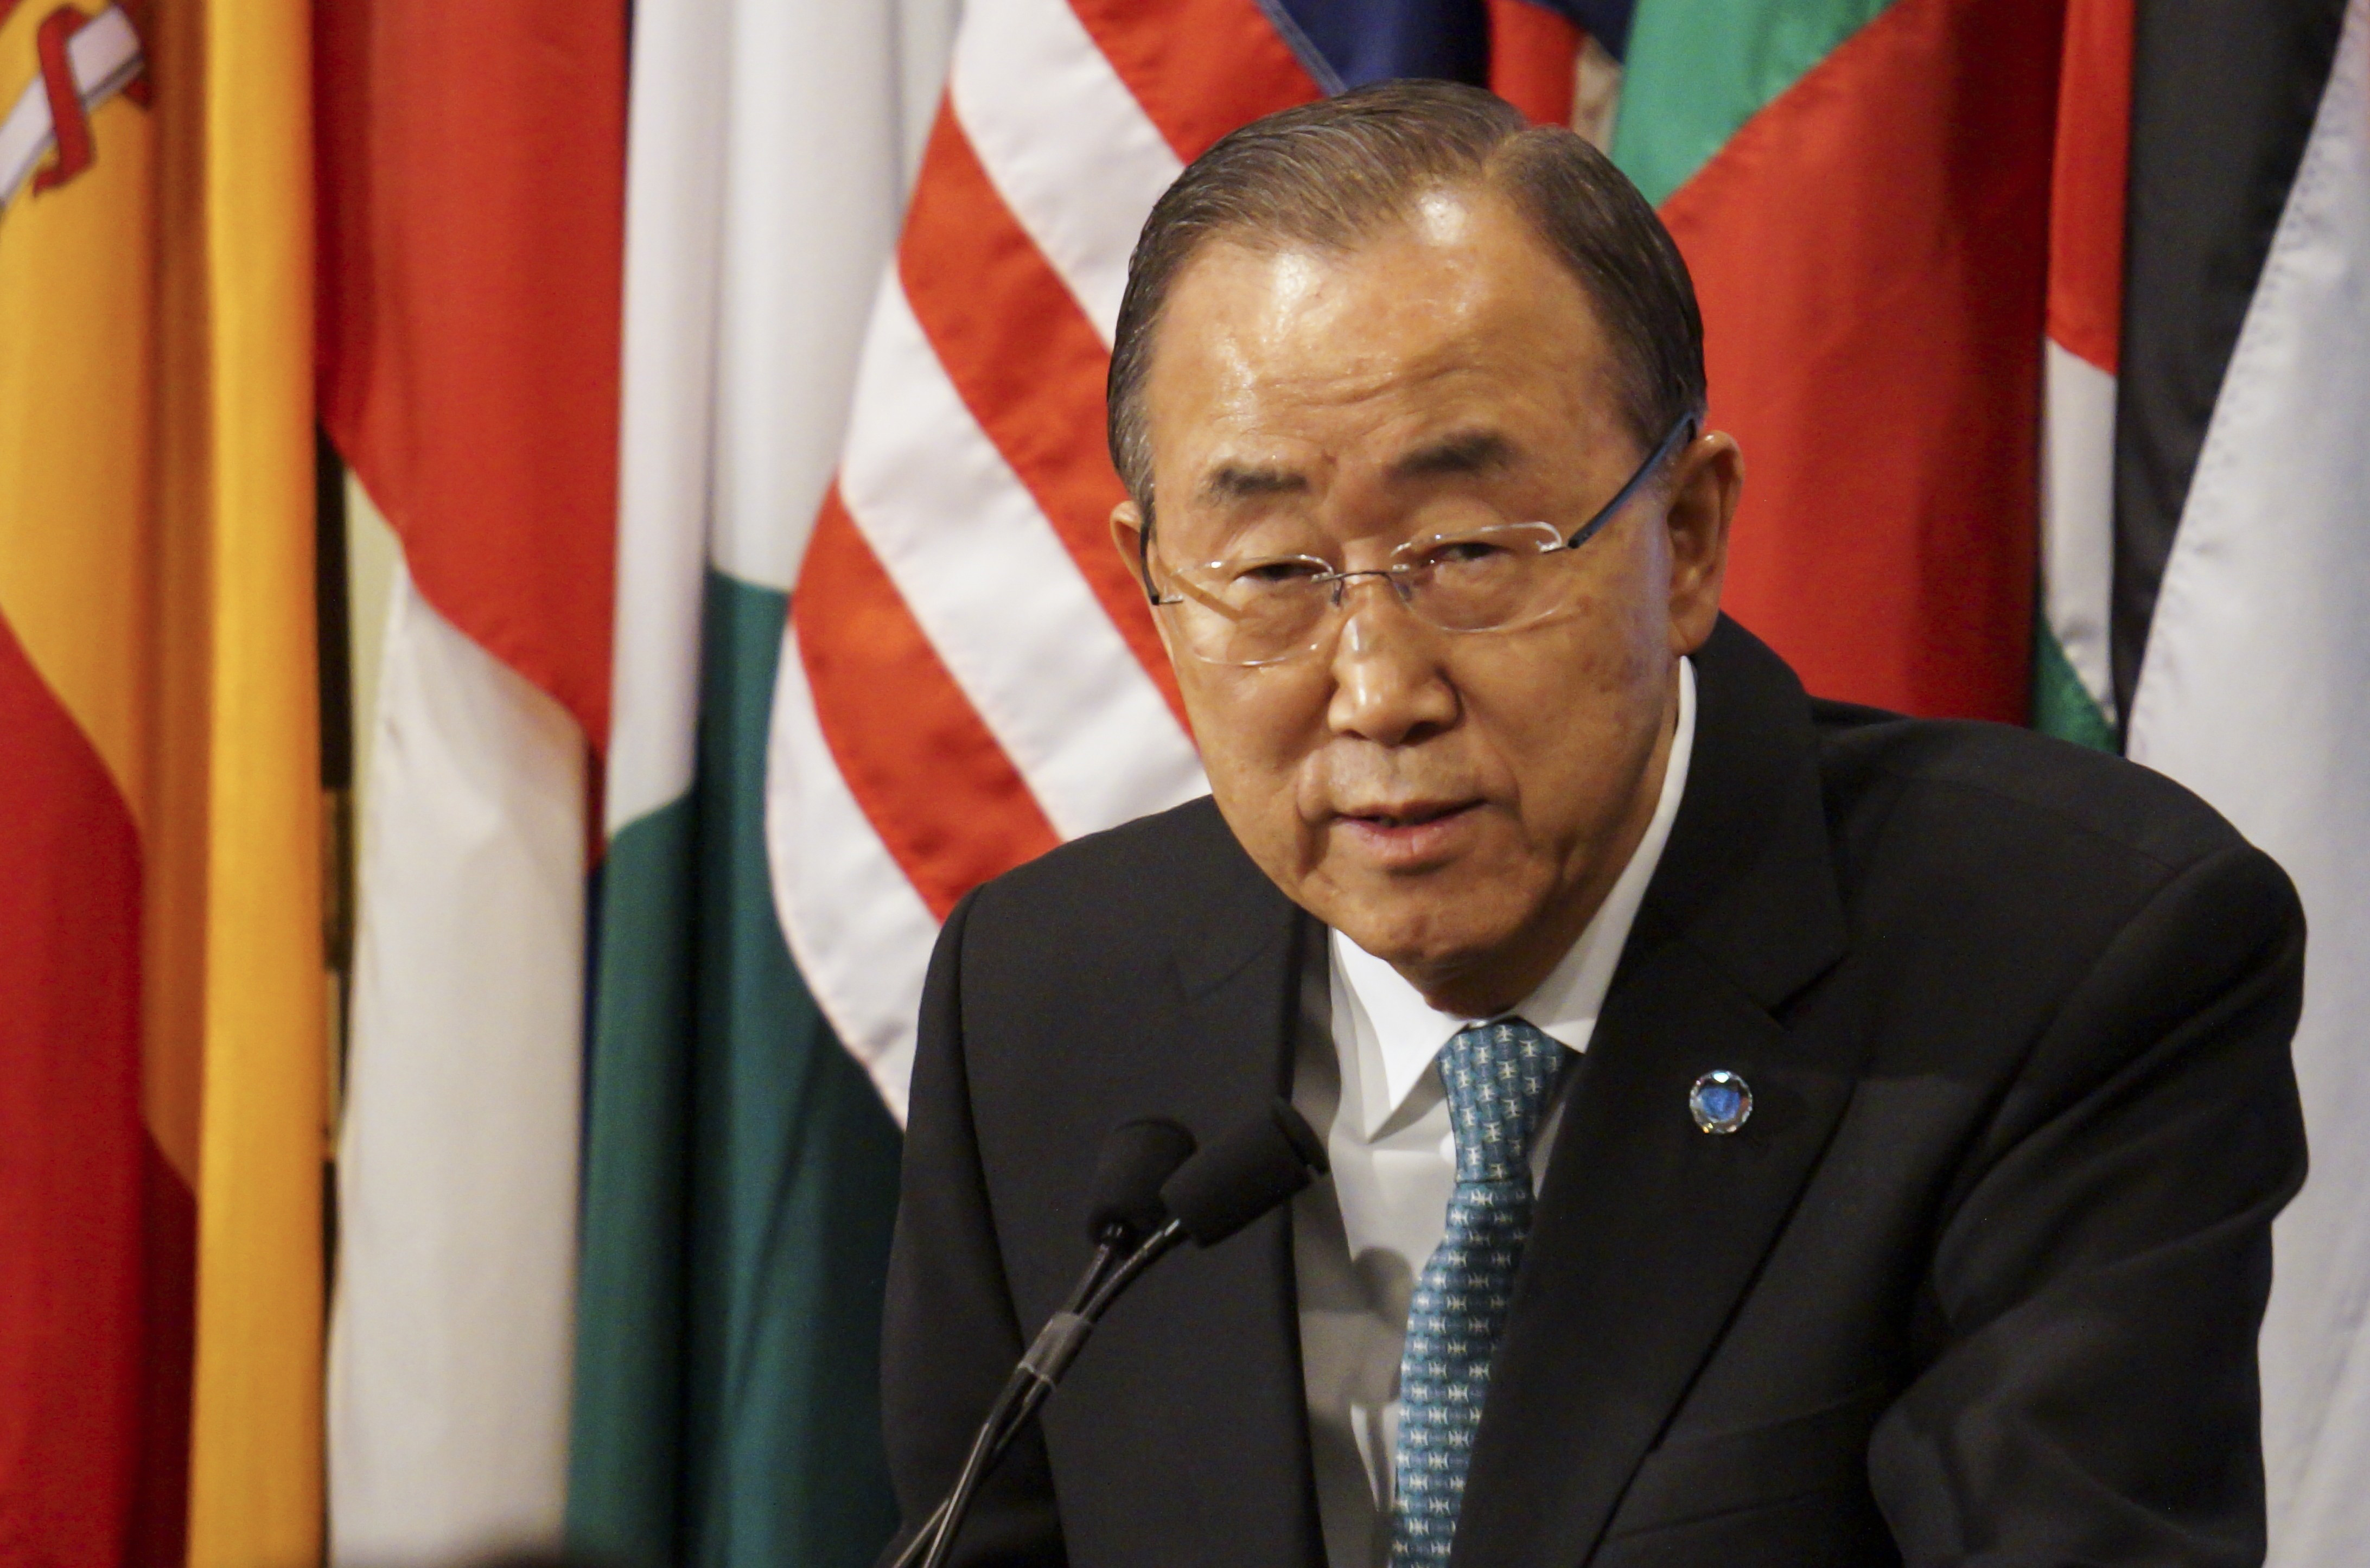 UN Secretary General Ban Ki-moon delivers a speech during a press conference at UN headquarters in New York on April 9, 2015. (Bilgin Sasmaz—Anadolu Agency/Getty Images)